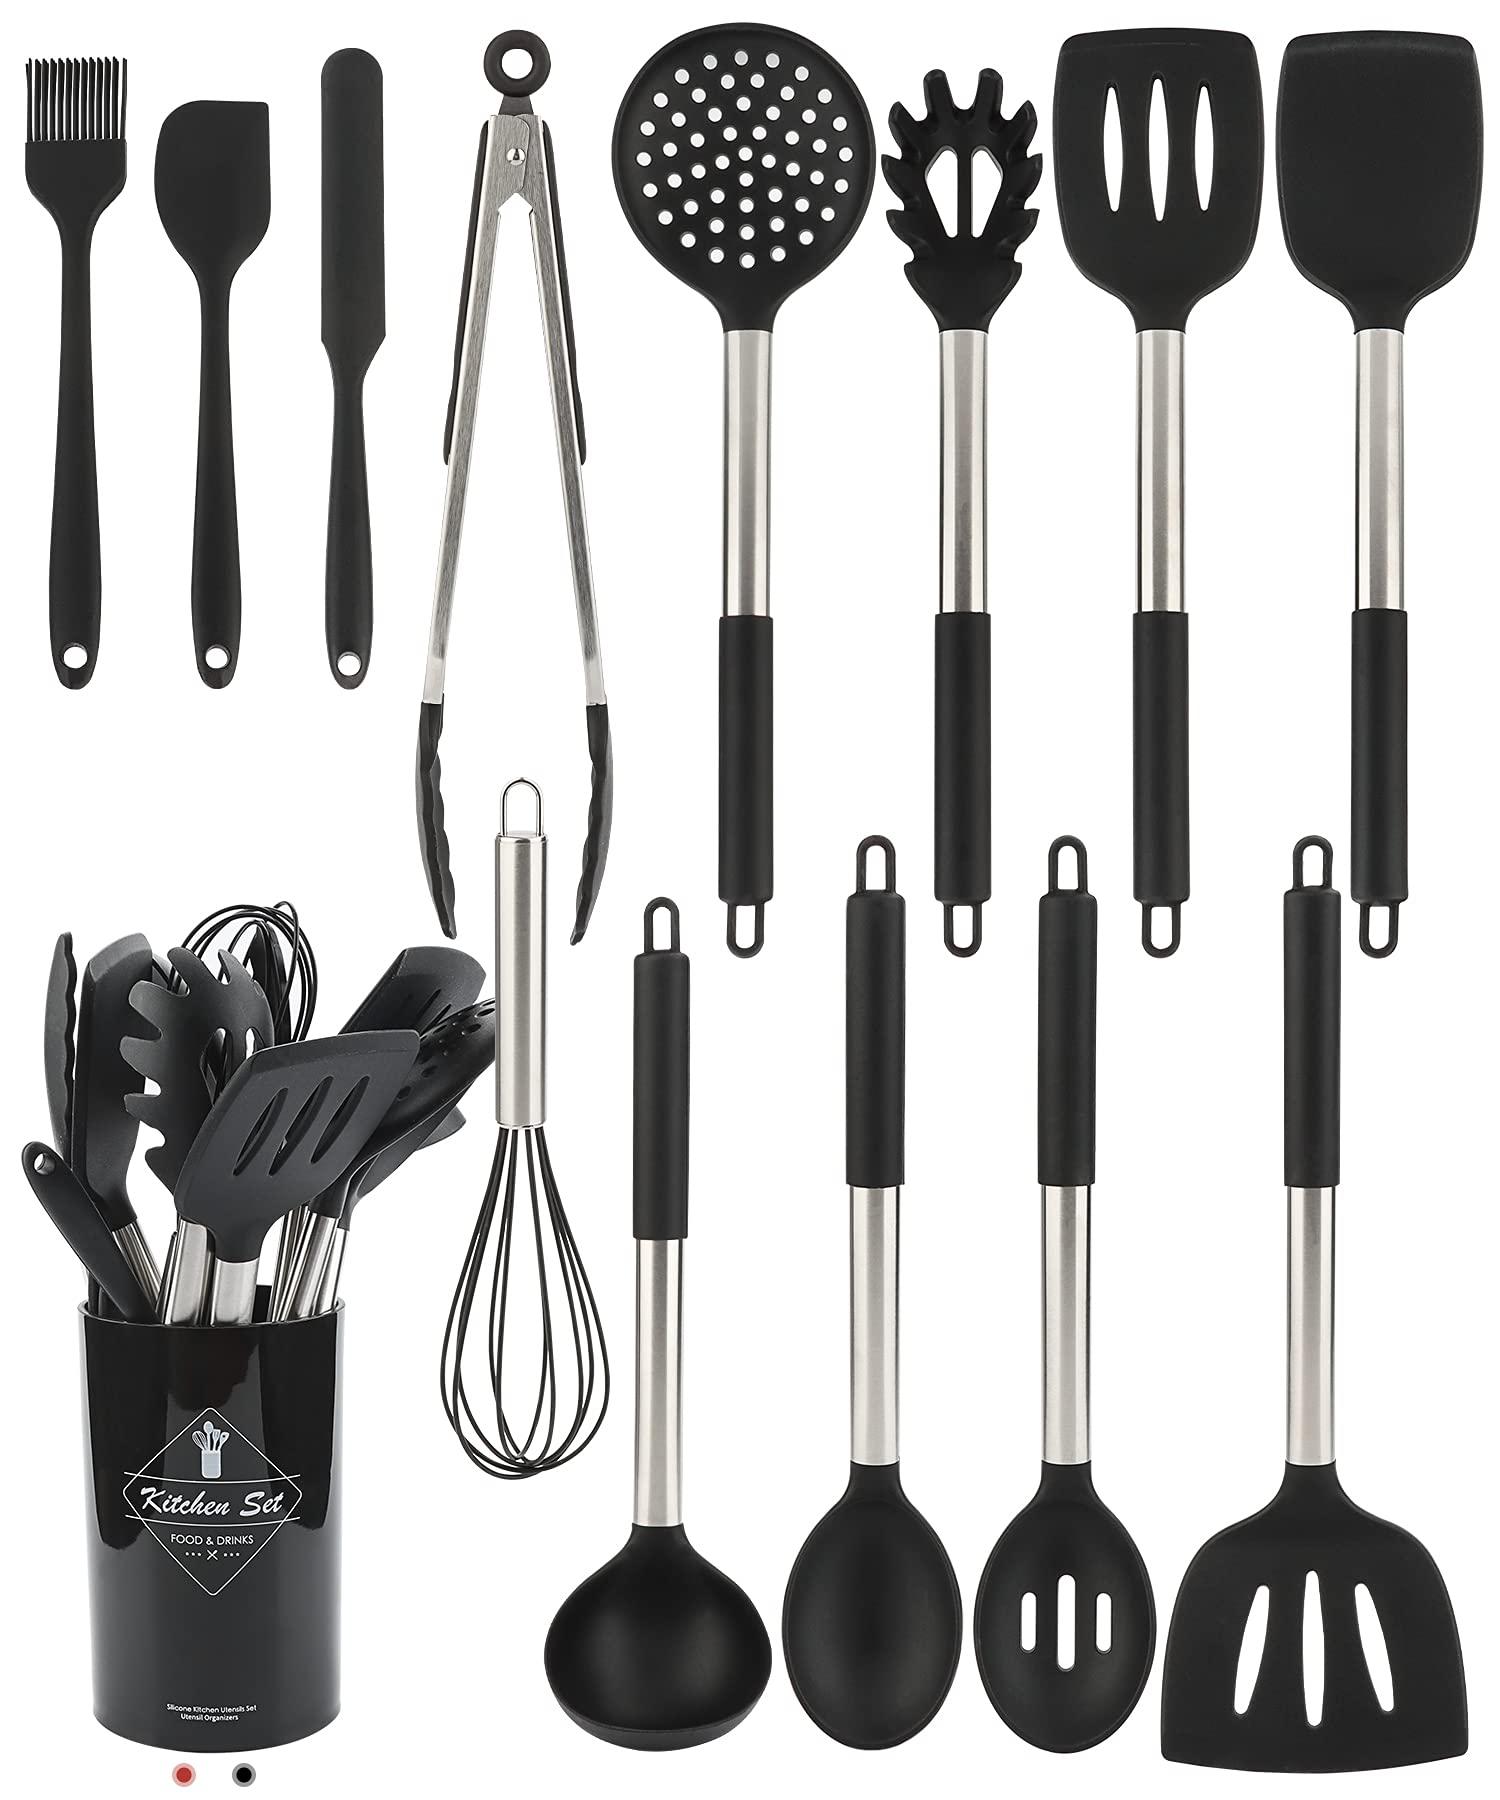 Pranski silicone cooking kitchen utensils set- 392? heat resistant